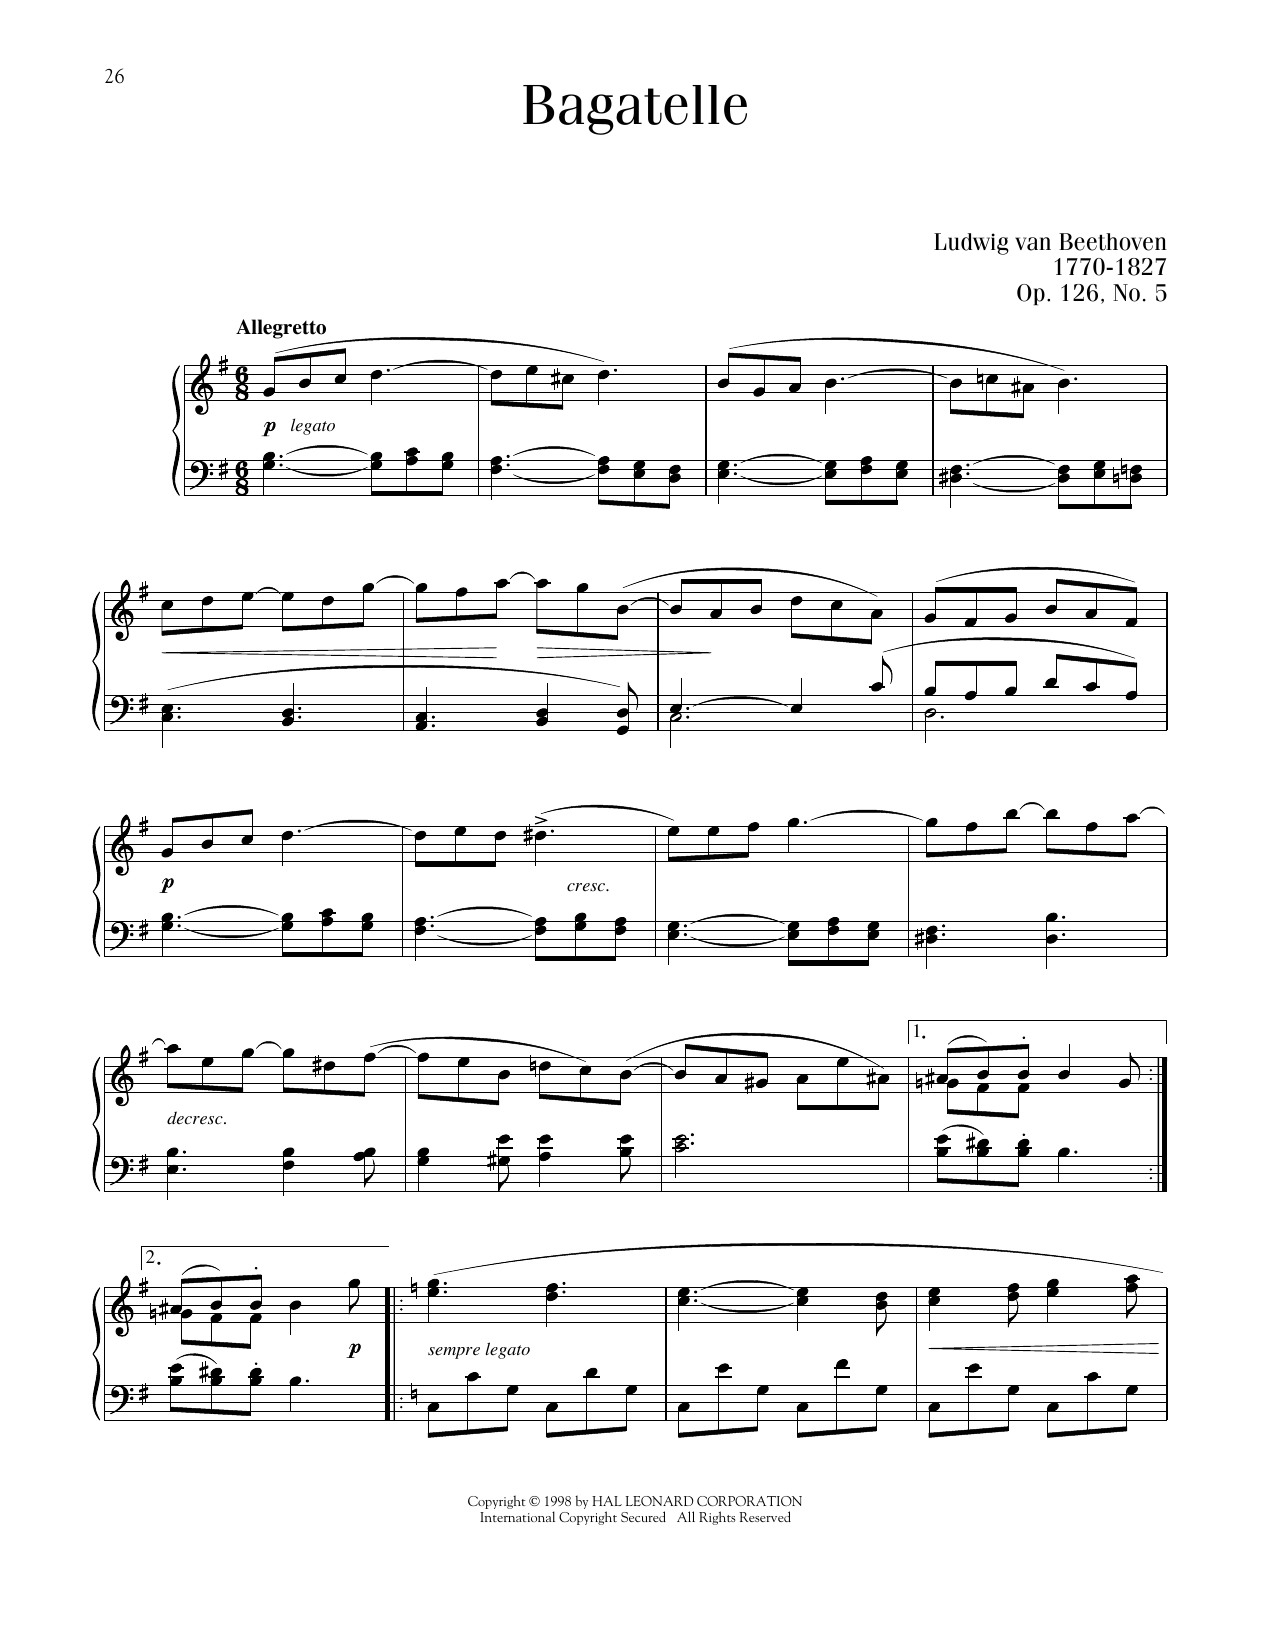 Ludwig van Beethoven Bagatelle In G Major, Op. 126, No. 5 sheet music notes printable PDF score